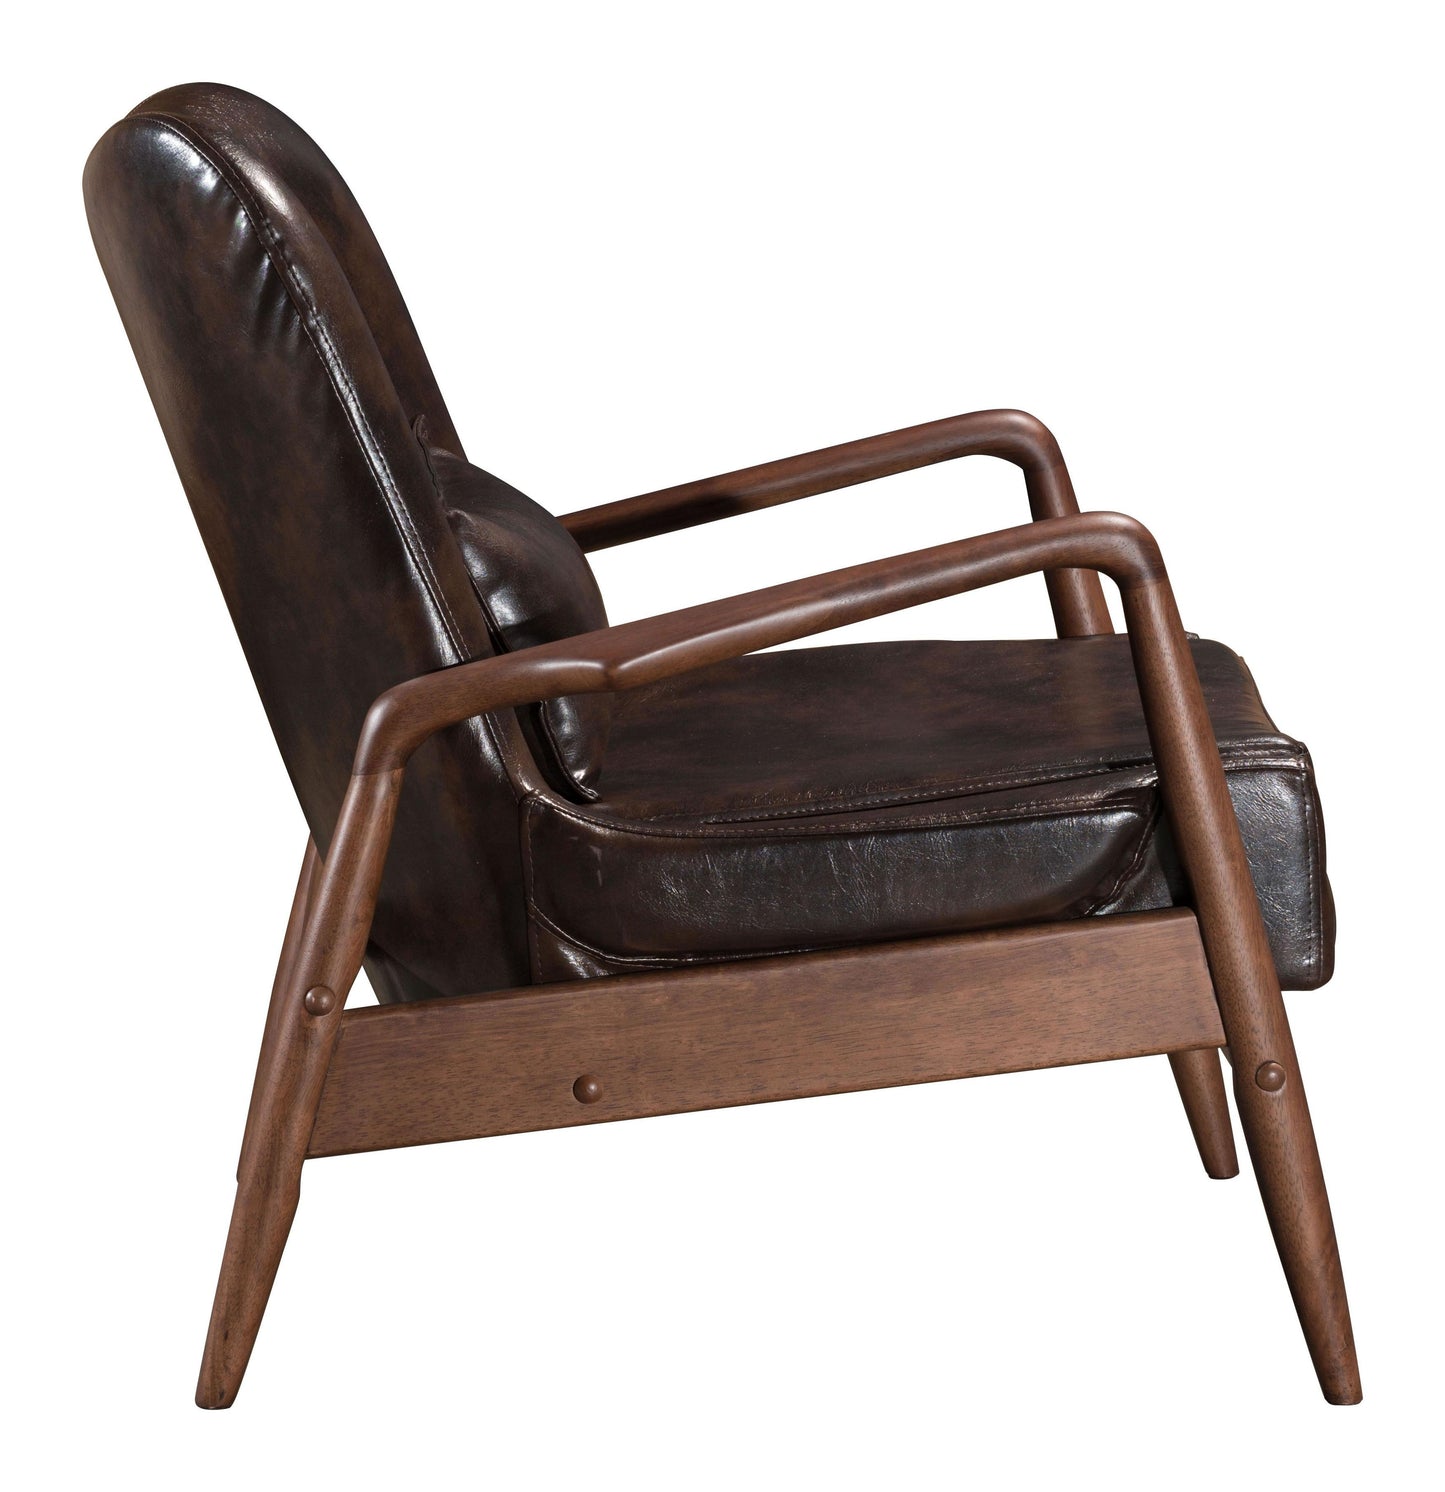 Bully Lounge Chair & Ottoman Brown